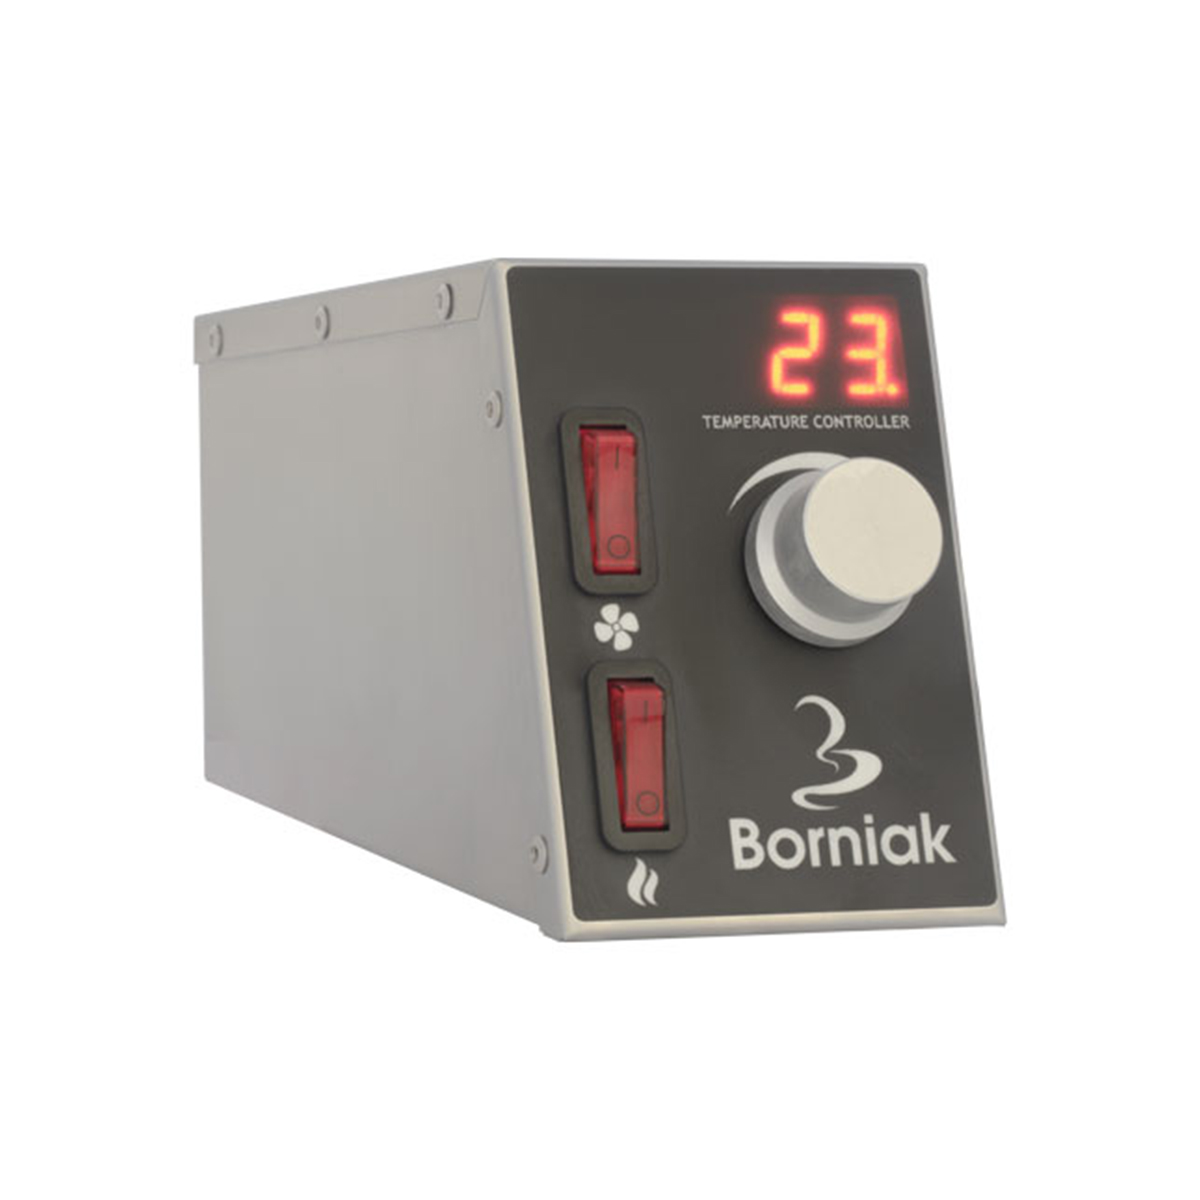 Borniak Digital Upgrade Steuerung für Borniak, Aluzink